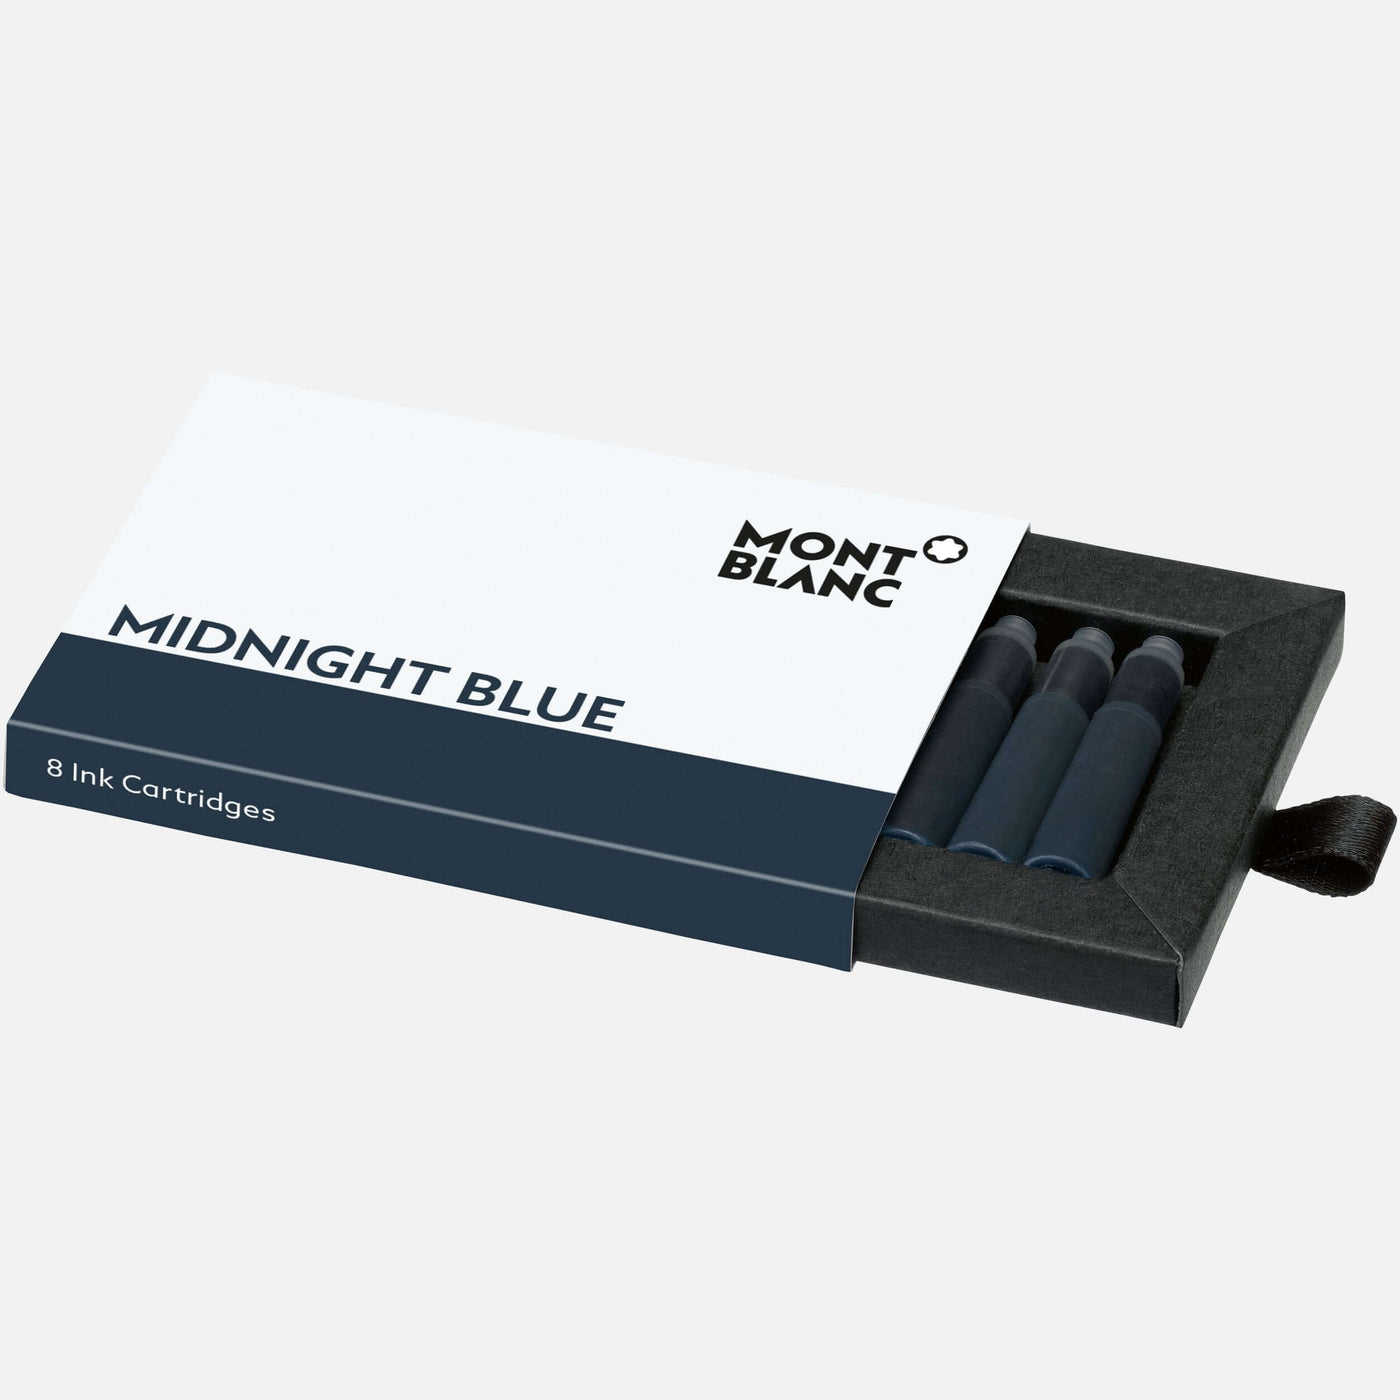 Refill Montblanc Midnight Blue Ink Cartridges | Pen Store | Pen Place